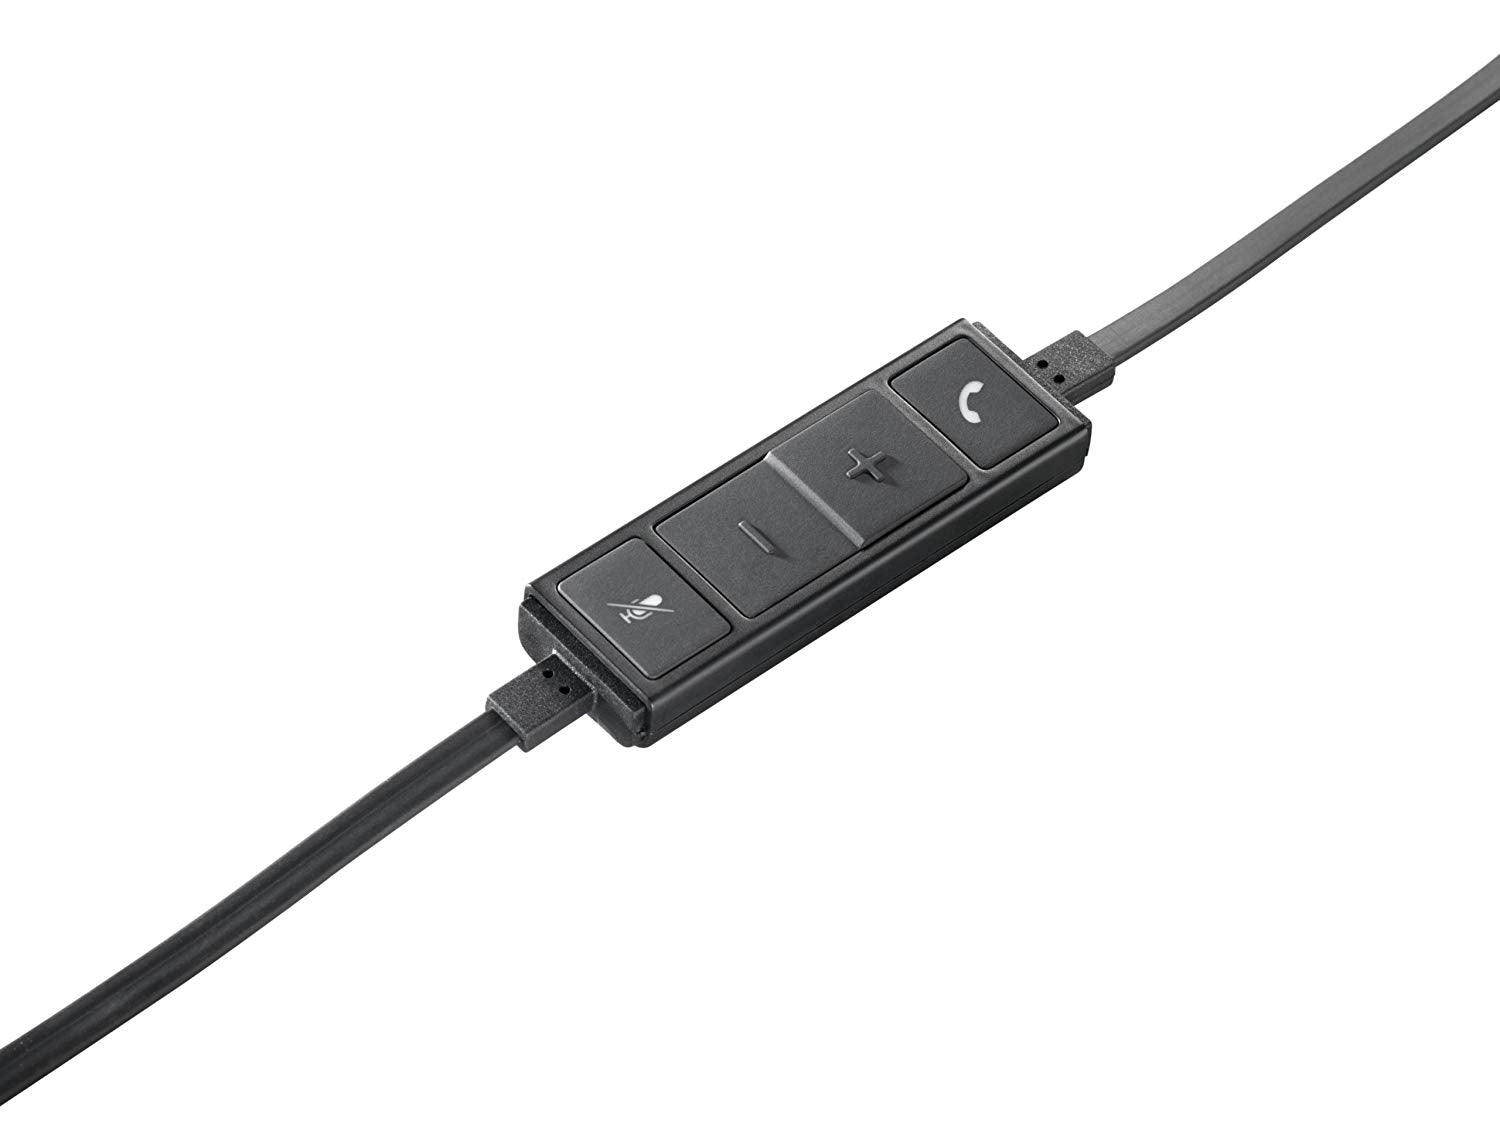 Logitech H650E USB Headset Enterprise-Grade Audio Quality